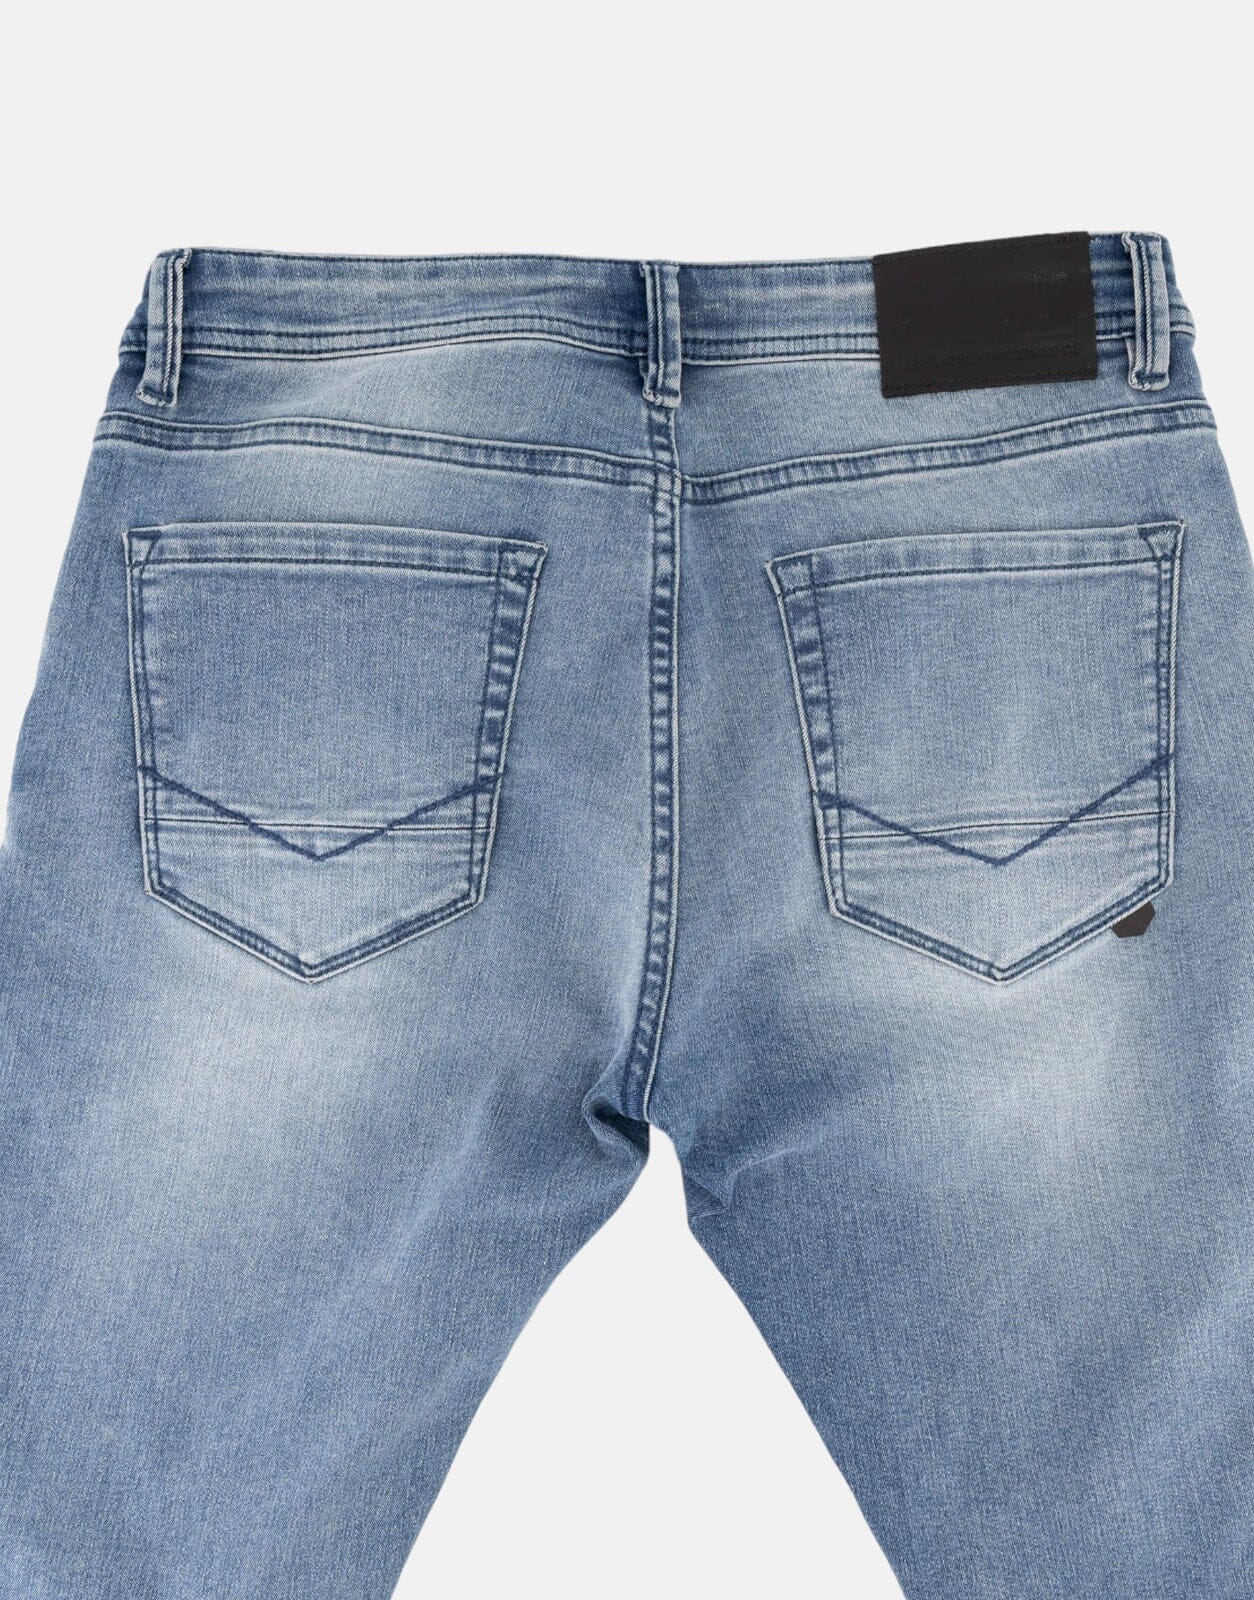 SPCC Rincon Jeans Blue - Subwear